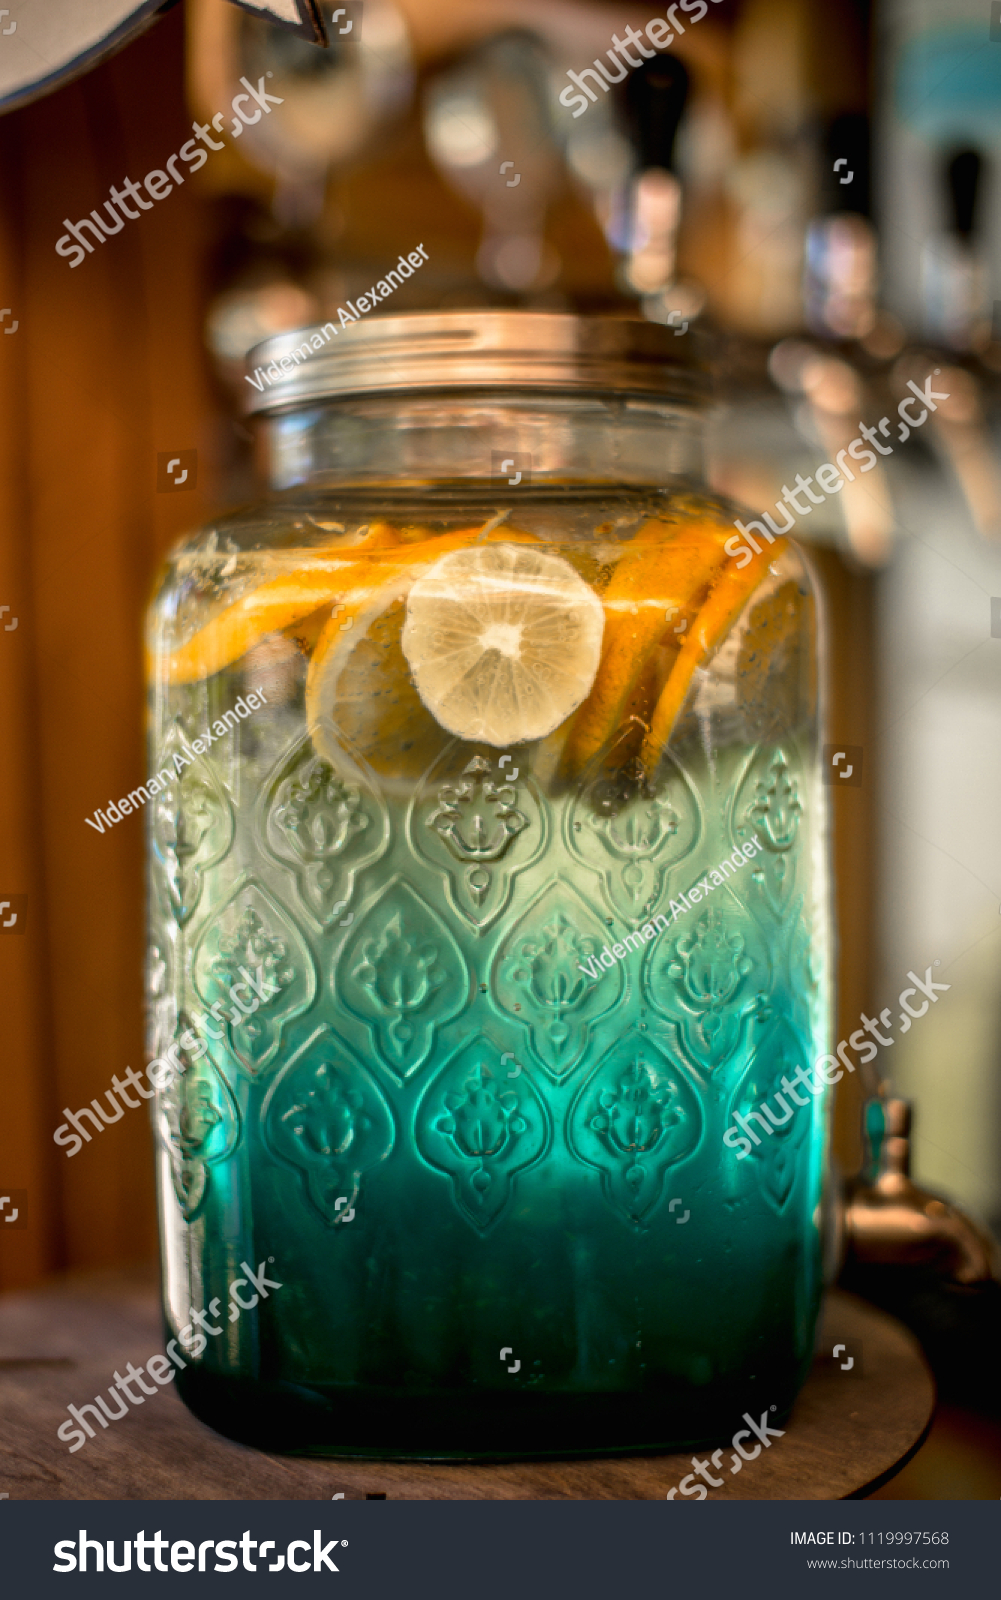 Download Colorful Lemonade Glass Bottle Blue Orange Stock Photo Edit Now 1119997568 PSD Mockup Templates